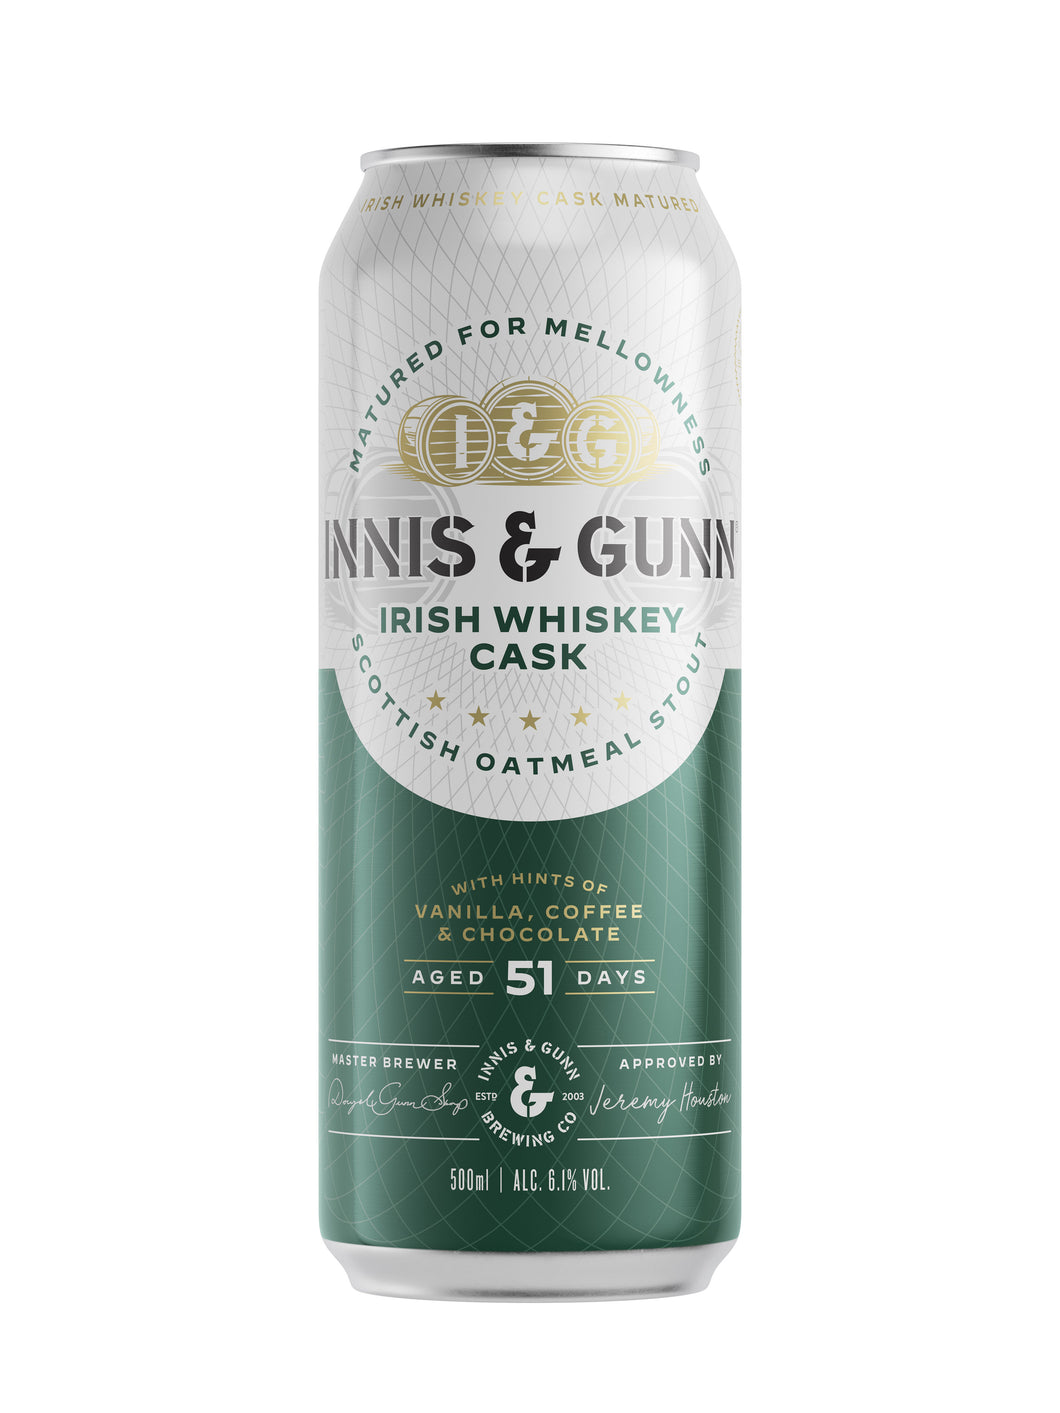 Innis & Gunn Irish Whiskey Cask 500 mL can